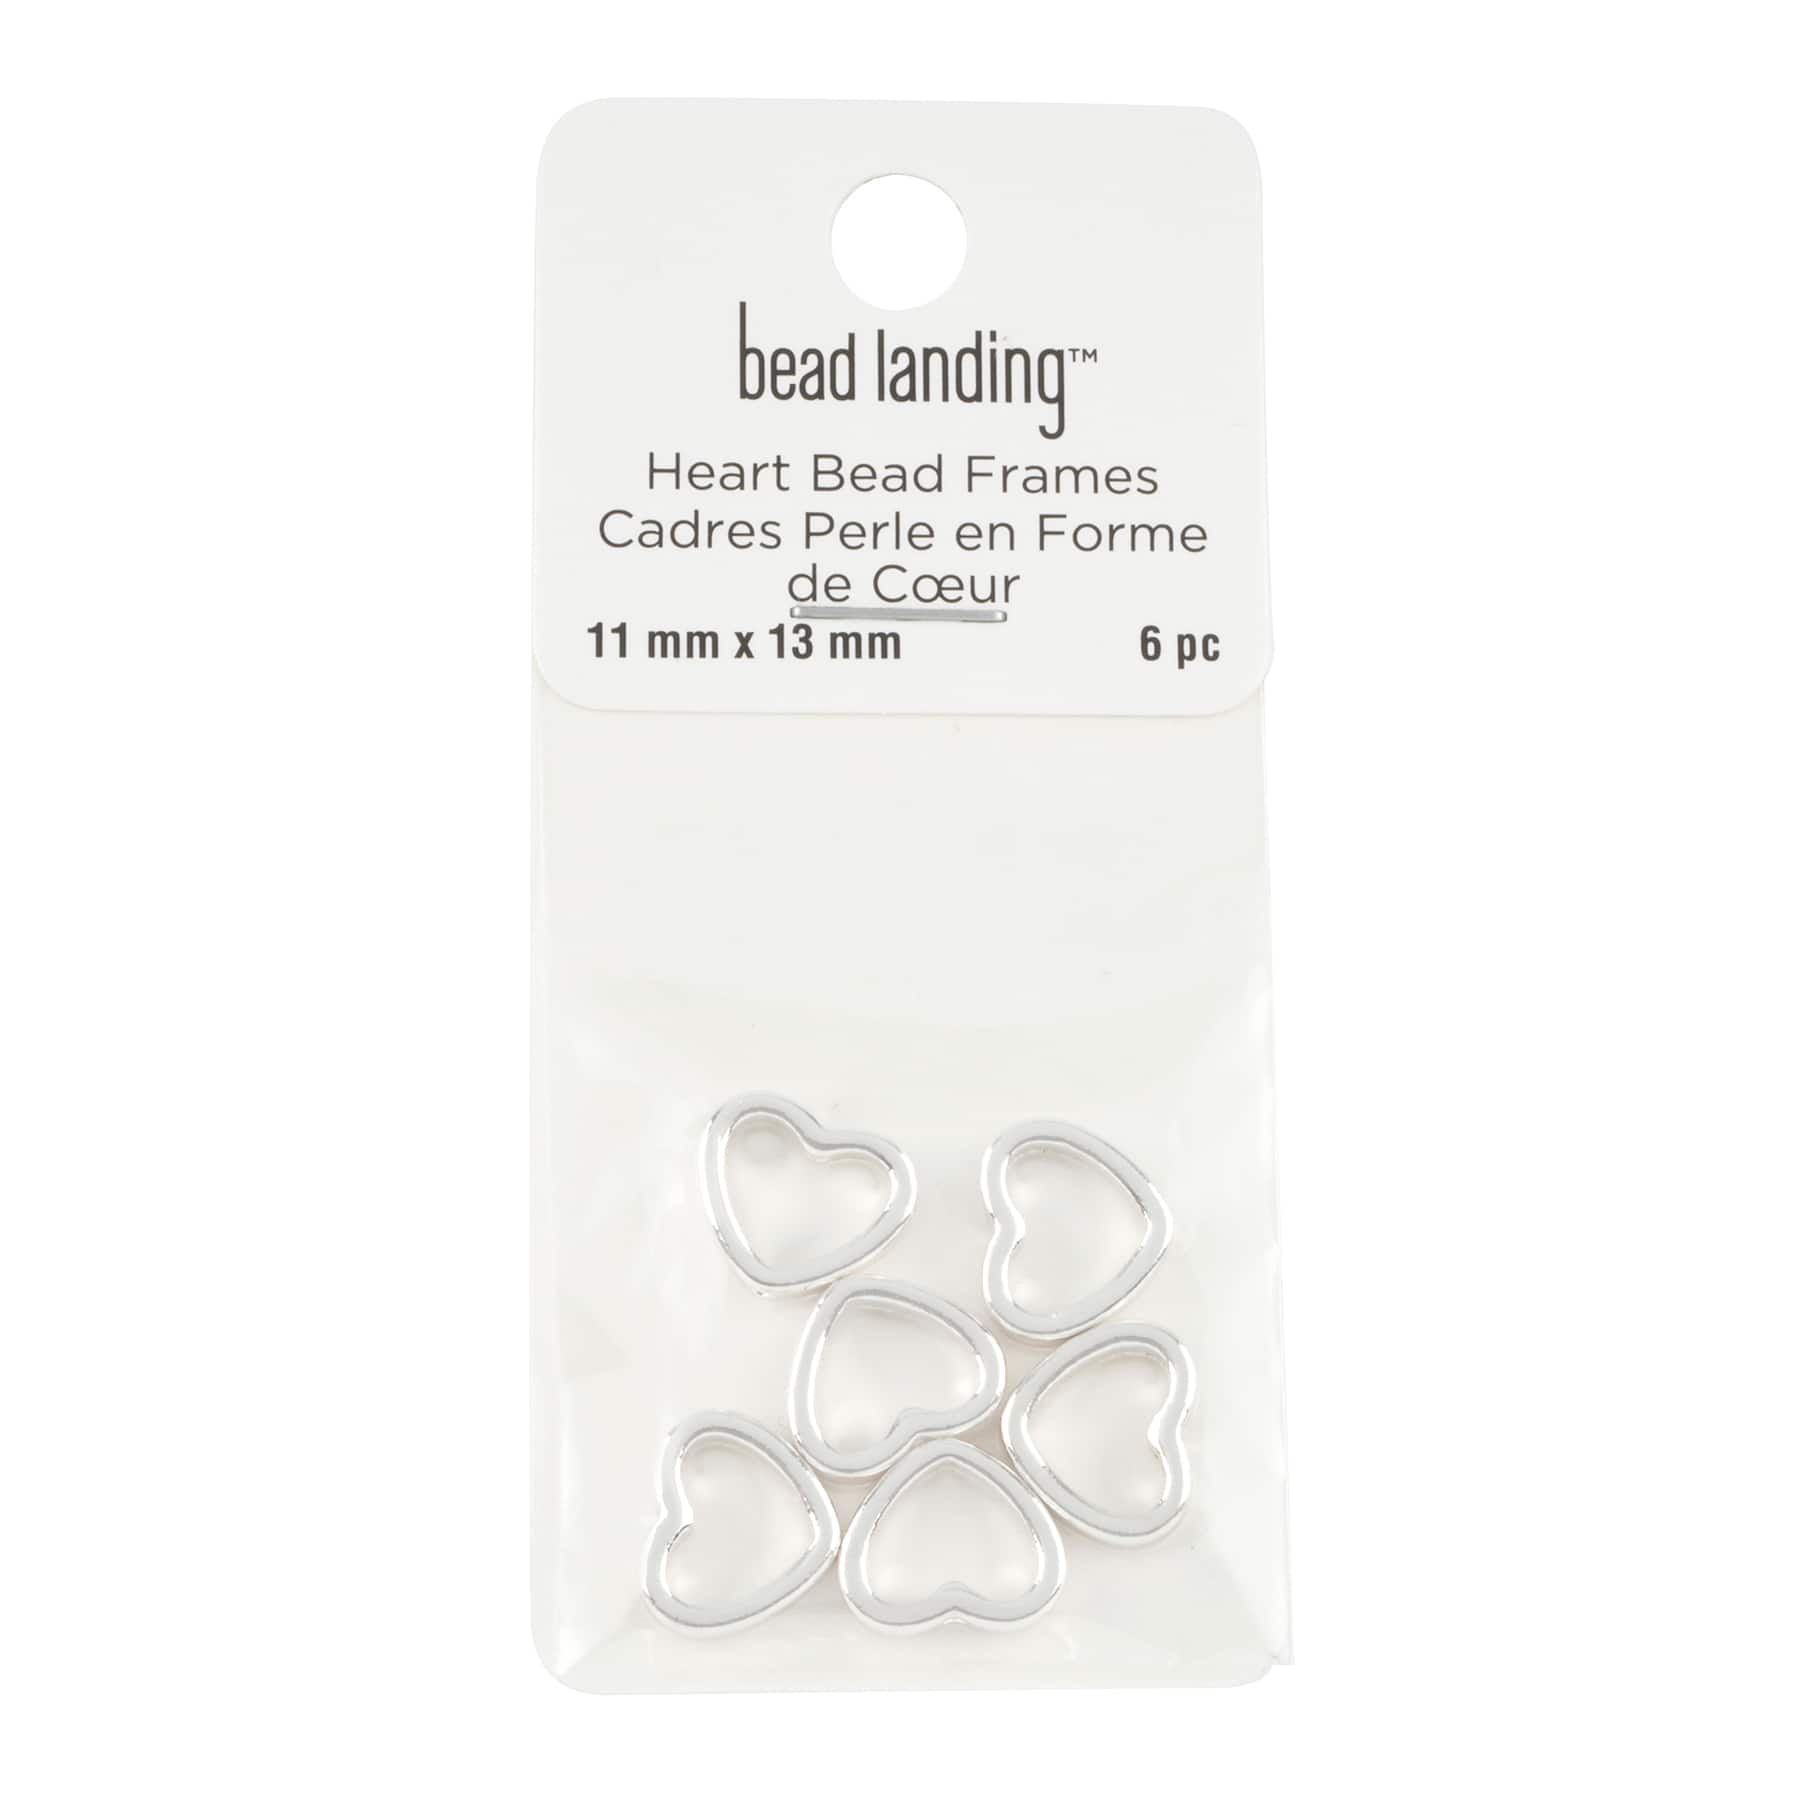 12 Packs: 6 ct. (72 total) Heart Bead Frames by Bead Landing&#x2122;